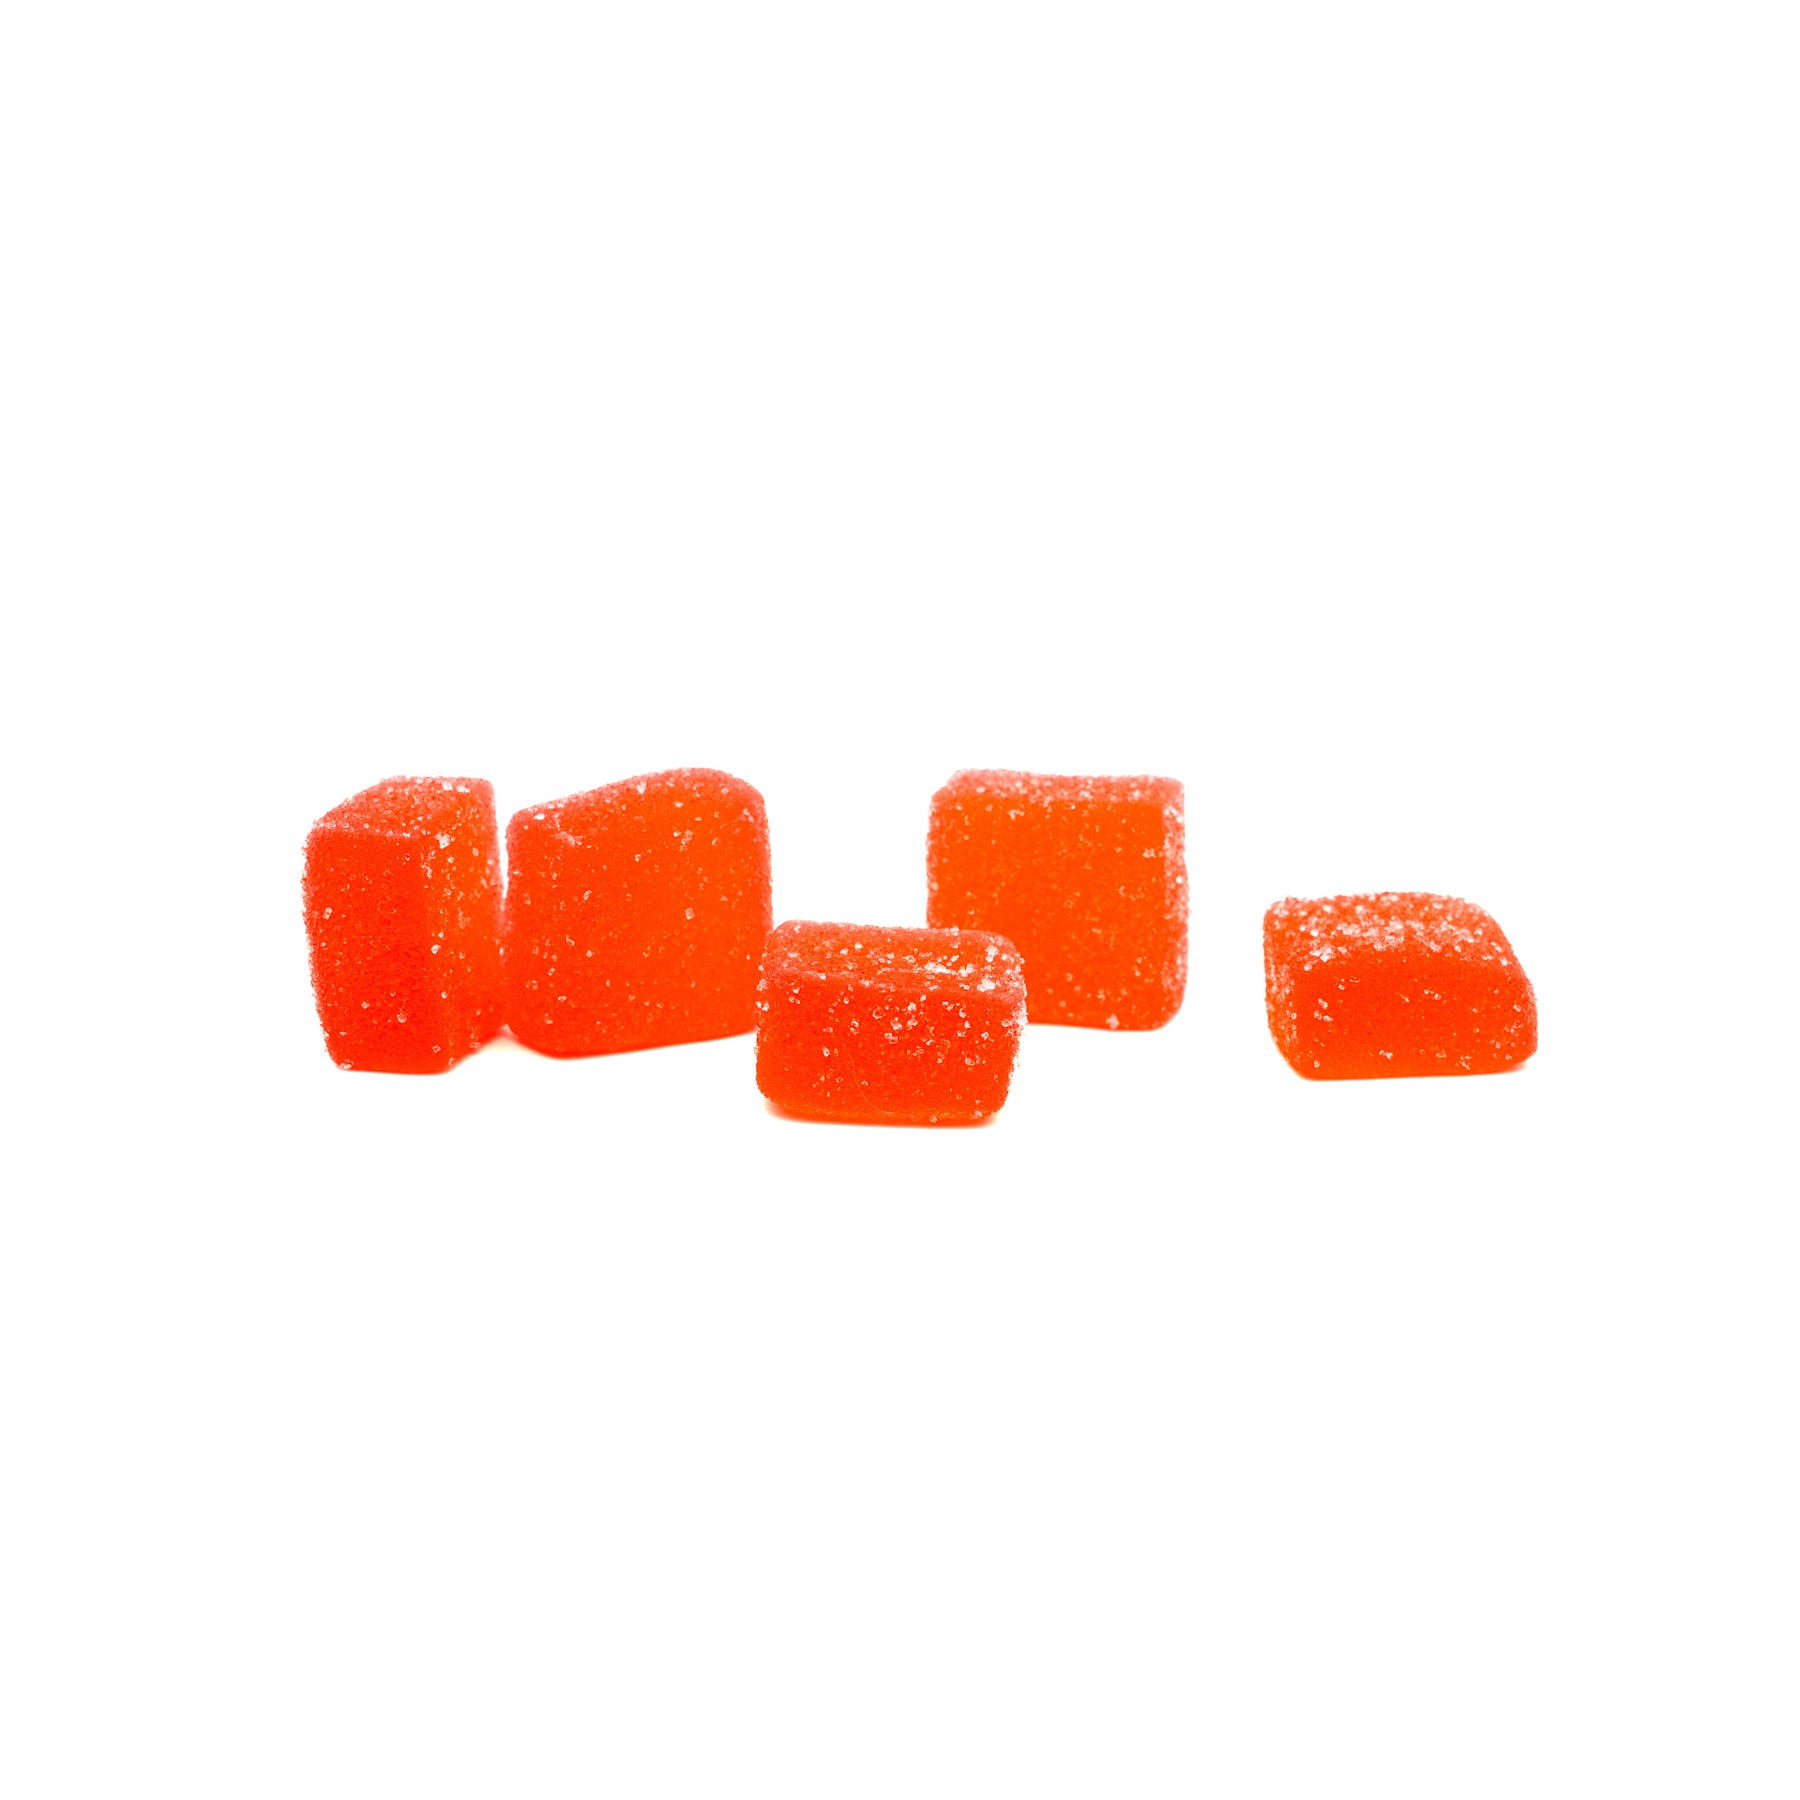 Strawberry THCA Sour Gummies 25mg - 5 Pack